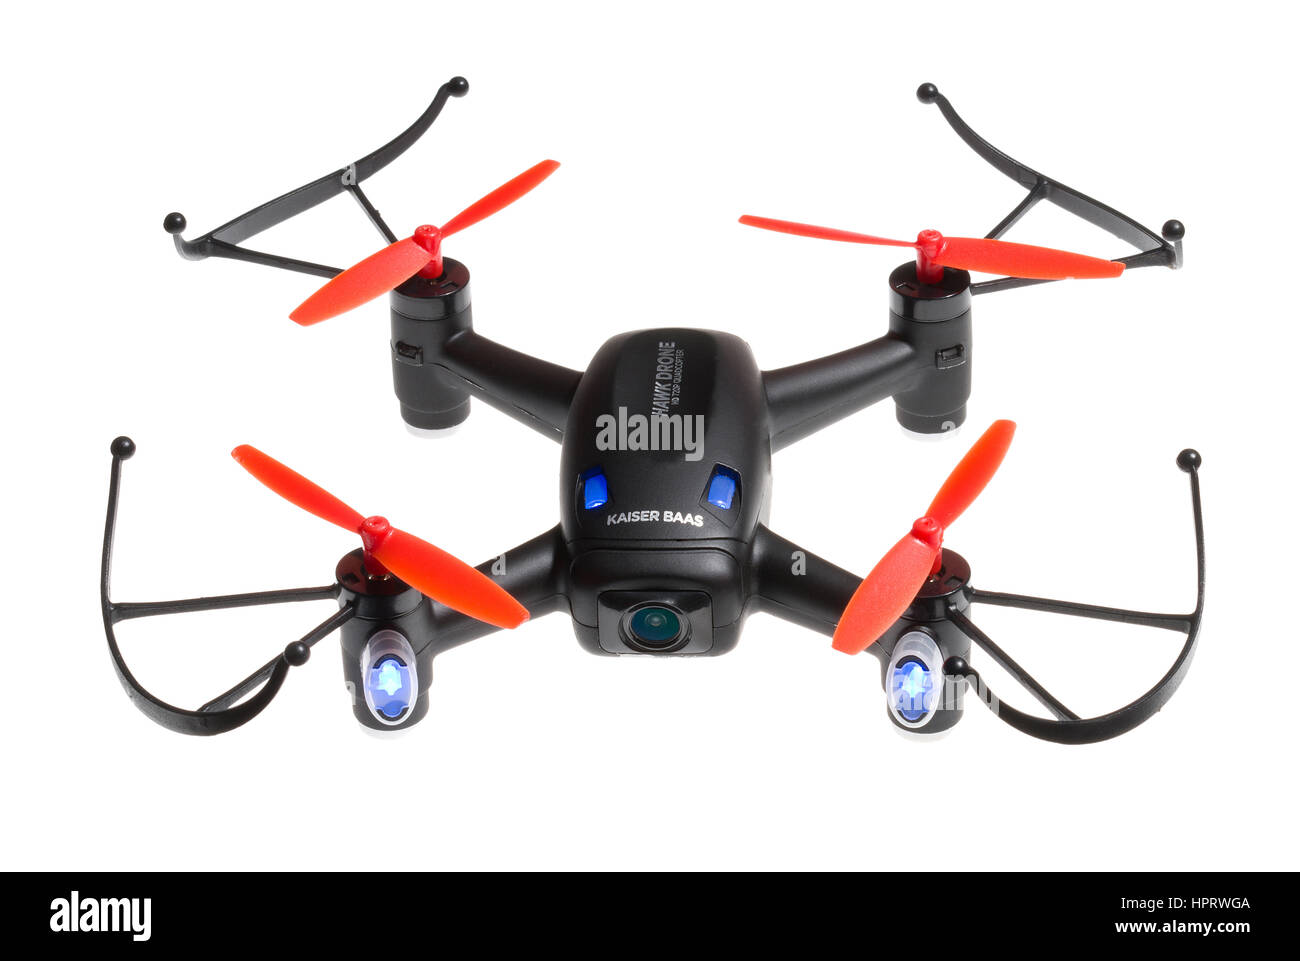 Kaiser Baas Theta drone. Camera enclosed in drone body. Stock Photo